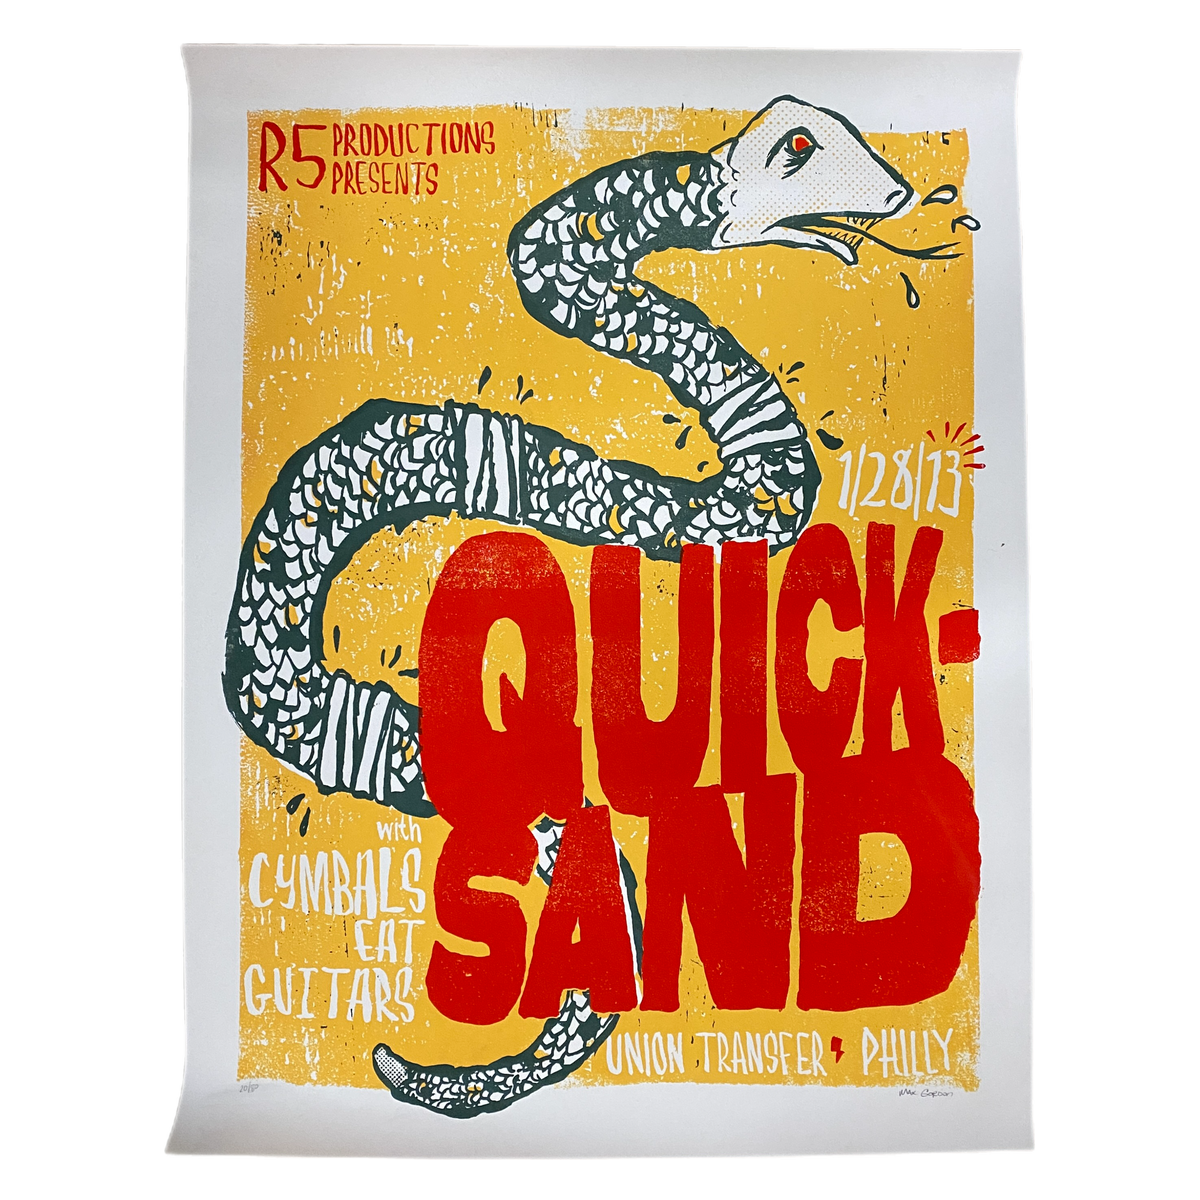 Quicksand &quot;Union Transfer 2013&quot; Philadelphia R5 Productions Screenprinted Poster